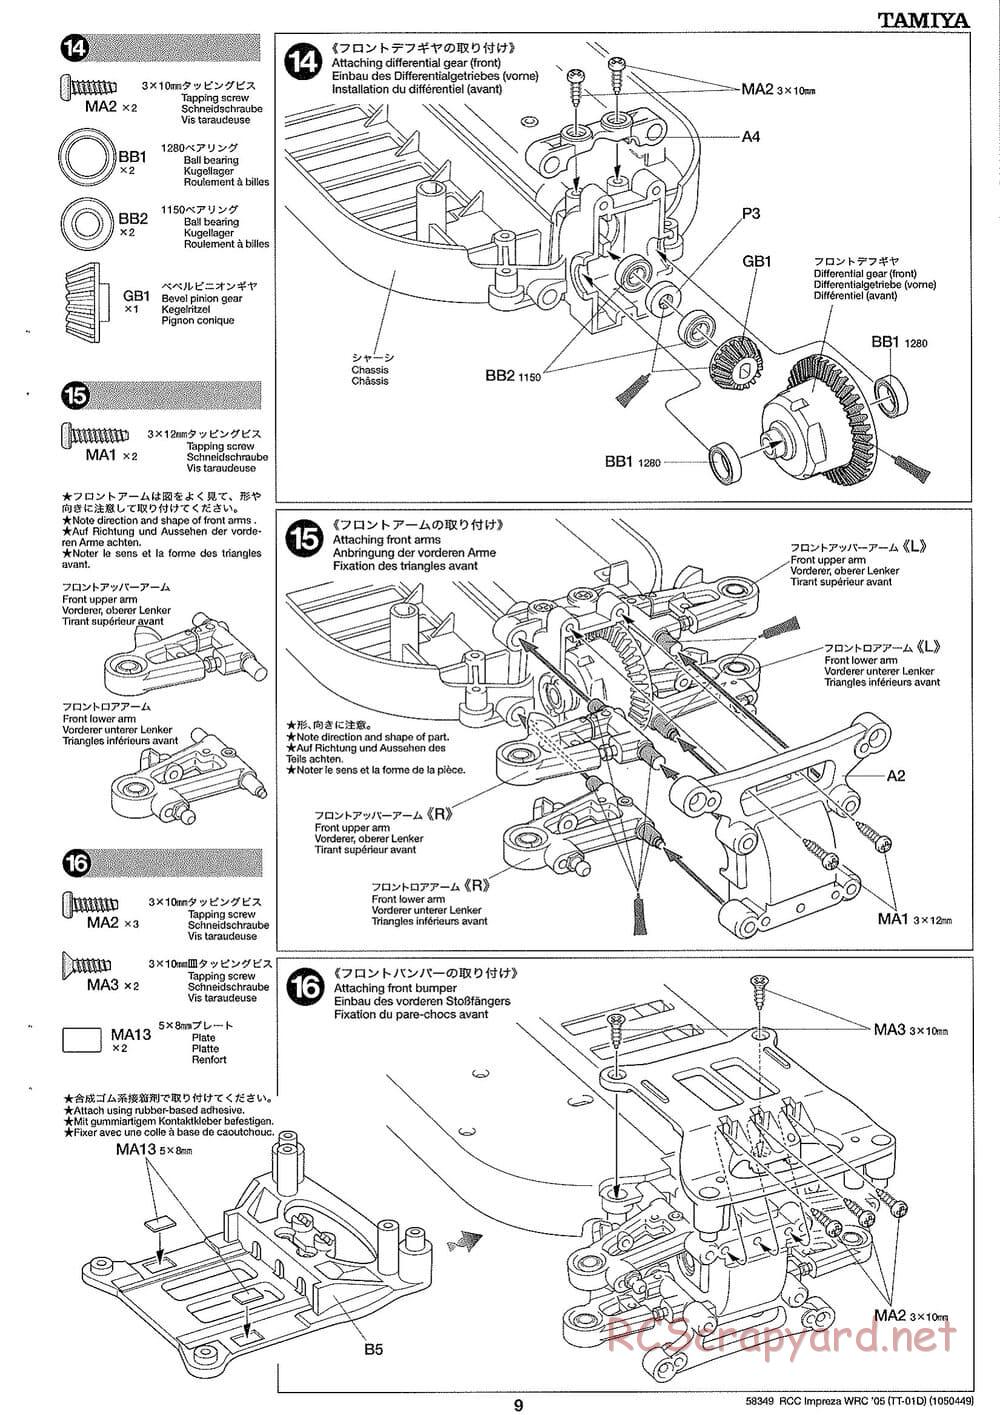 Tamiya - Subaru Impreza WRC Monte Carlo 05 - Drift Spec - TT-01D Chassis - Manual - Page 9